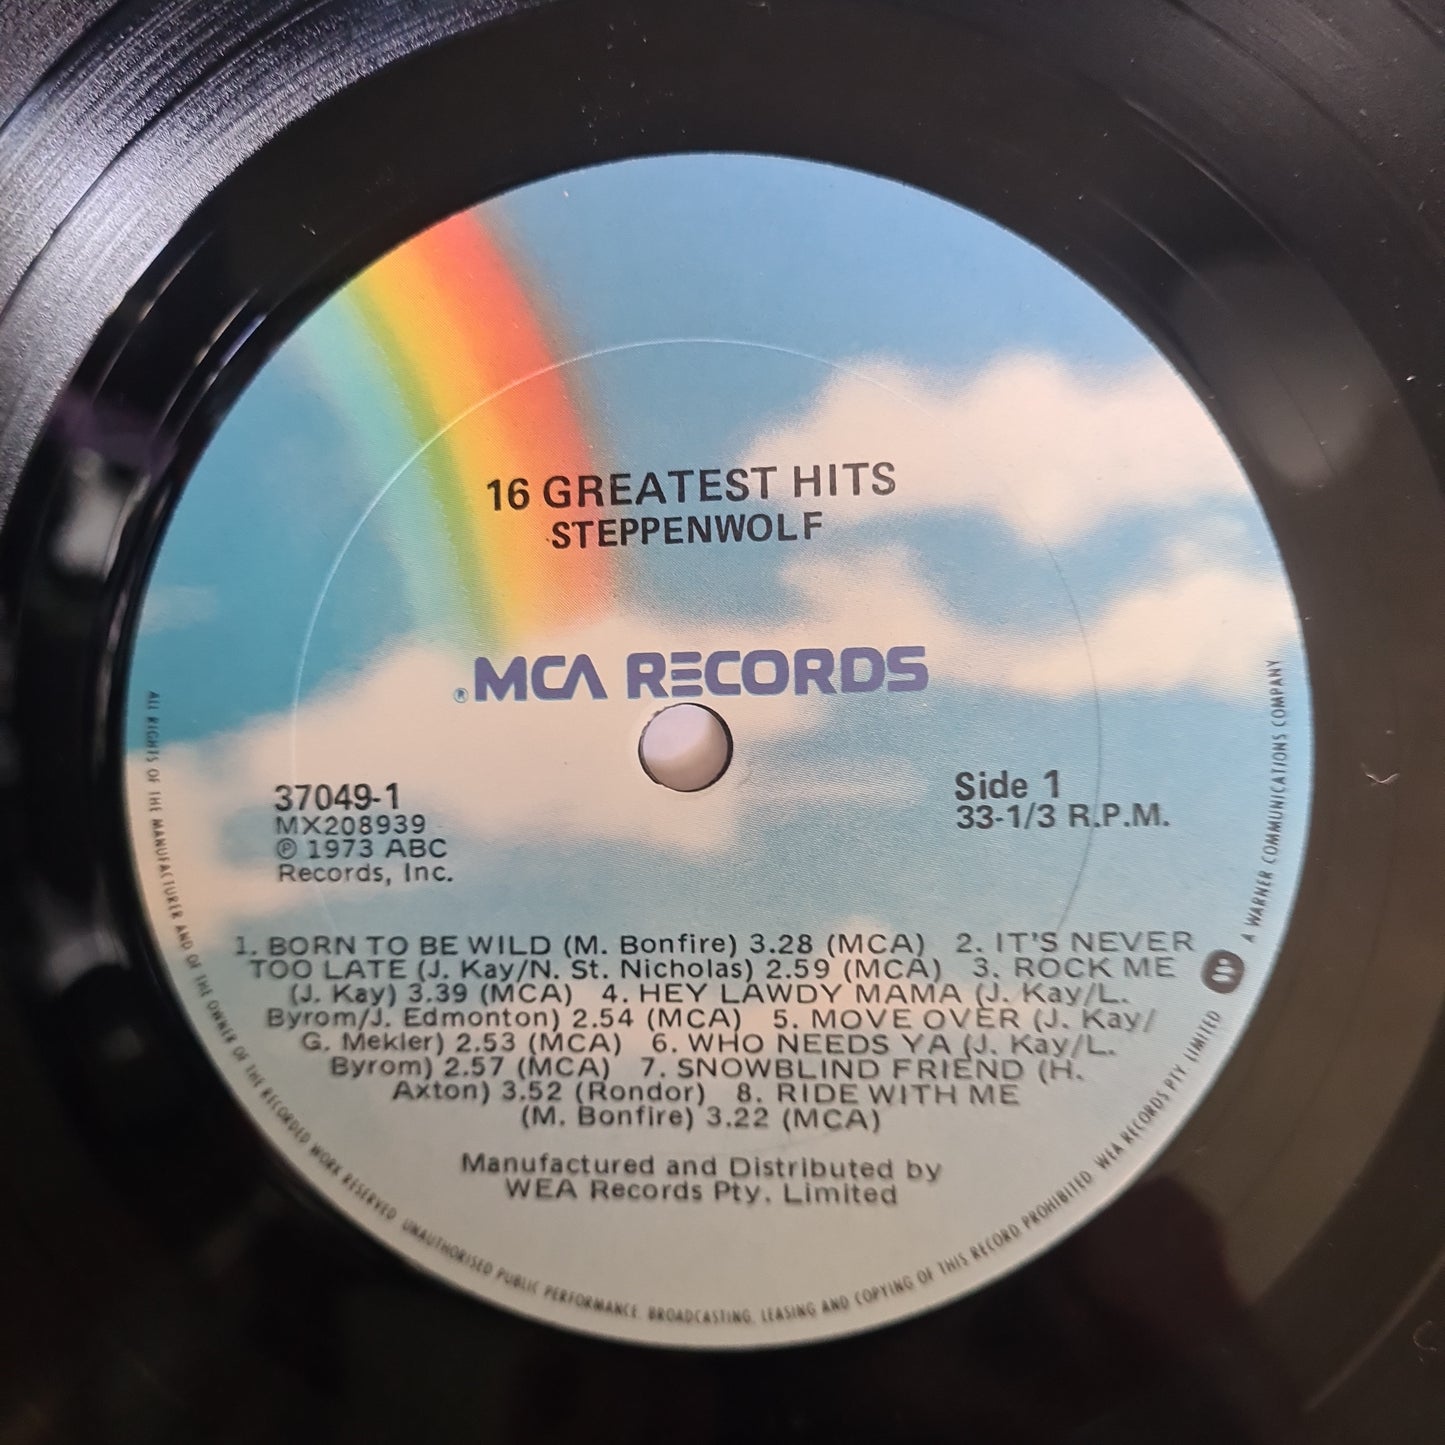 Steppenwolf – 16 Greatest Hits - 1981 - Vinyl Record